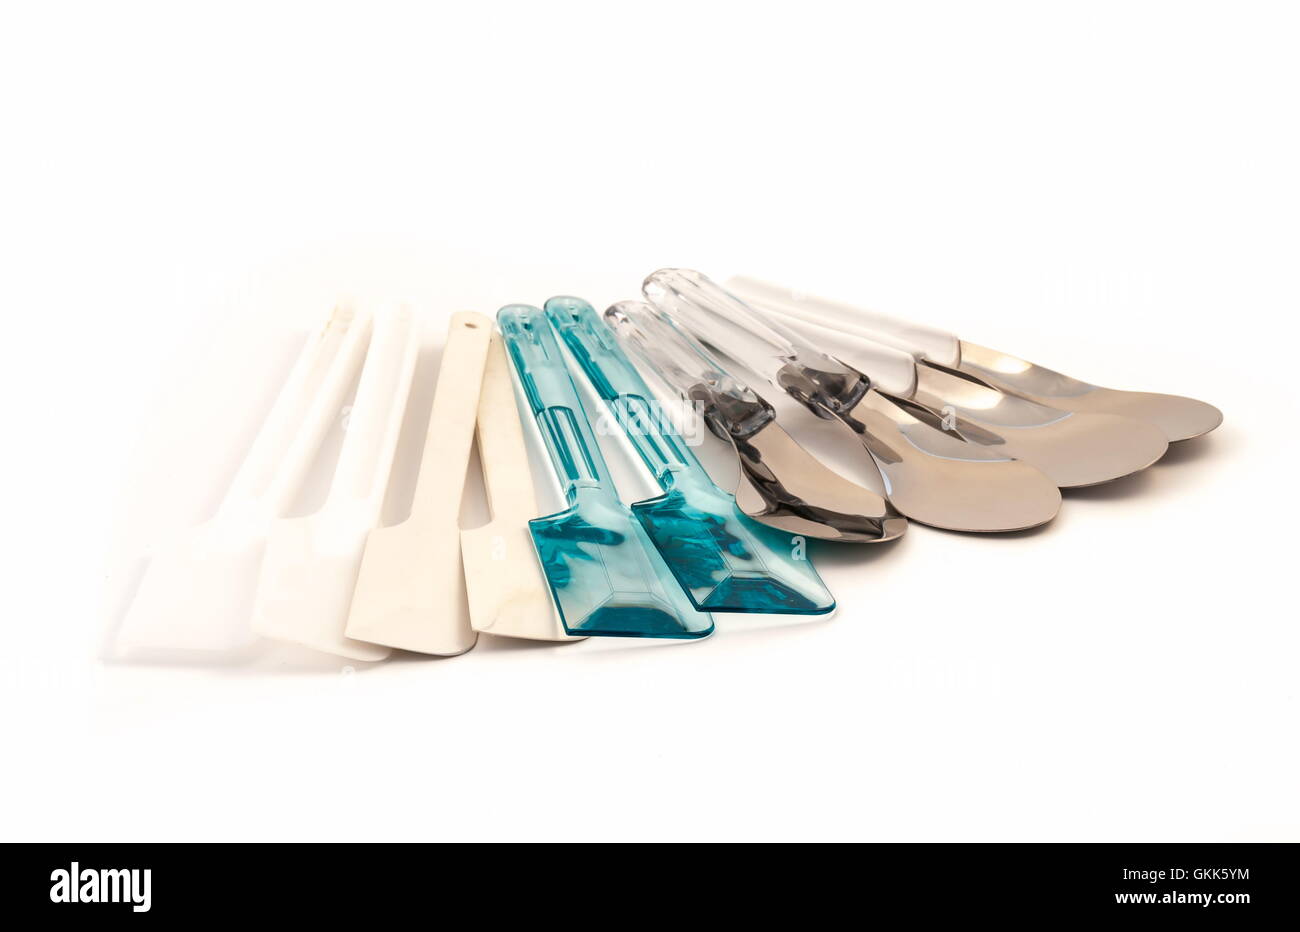 Set of spatula kitchen ware tool Stock Photo